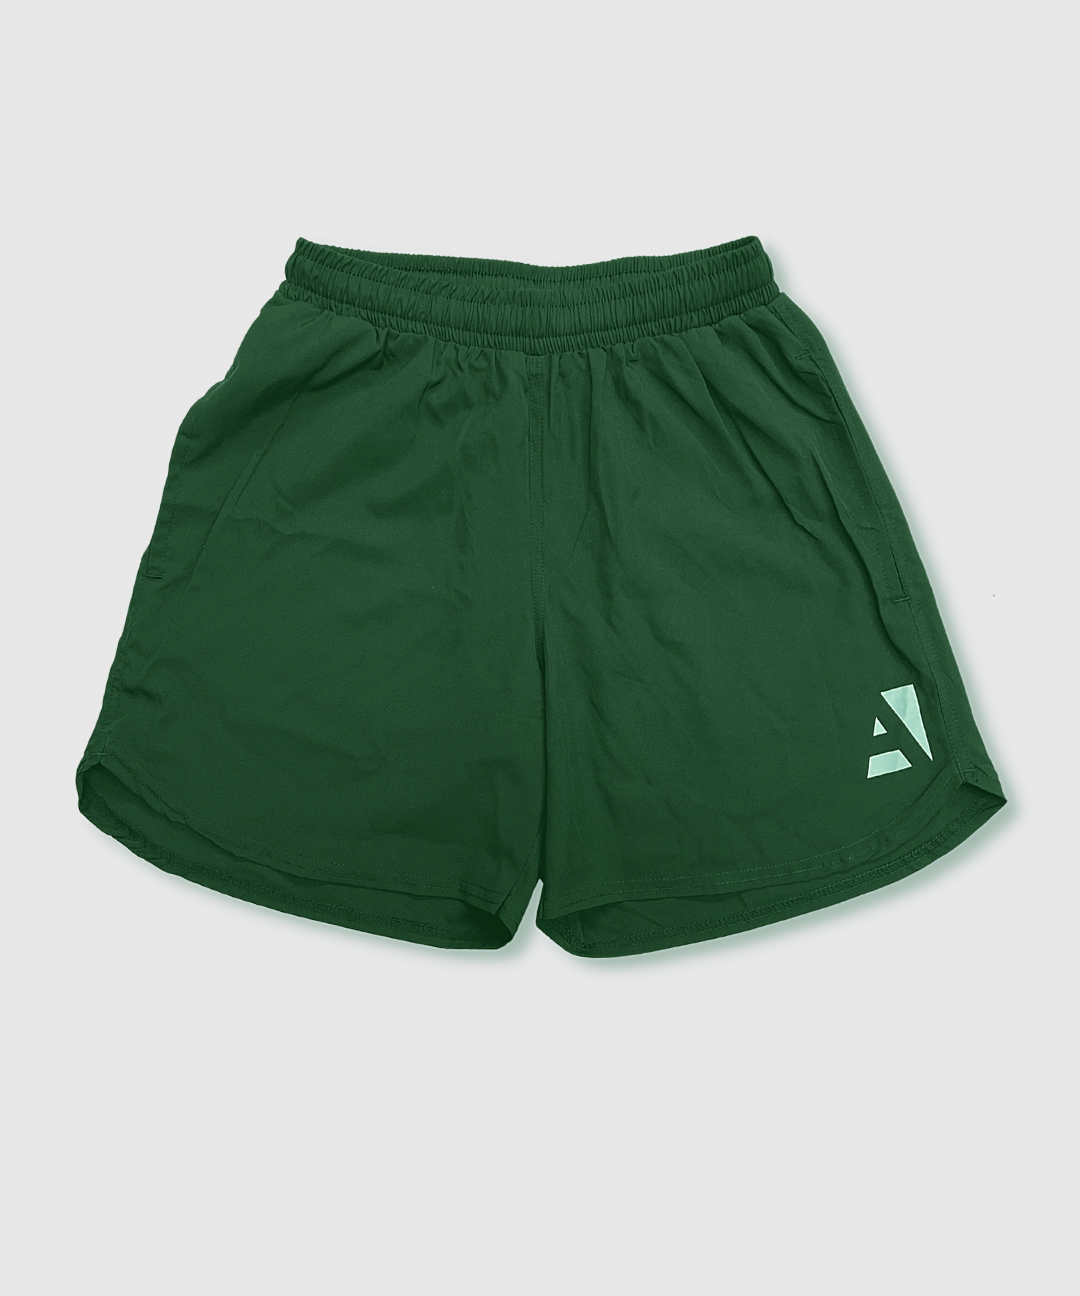 Basics Sport Short Army, 5.5'' Inseam Green Sport Shorts